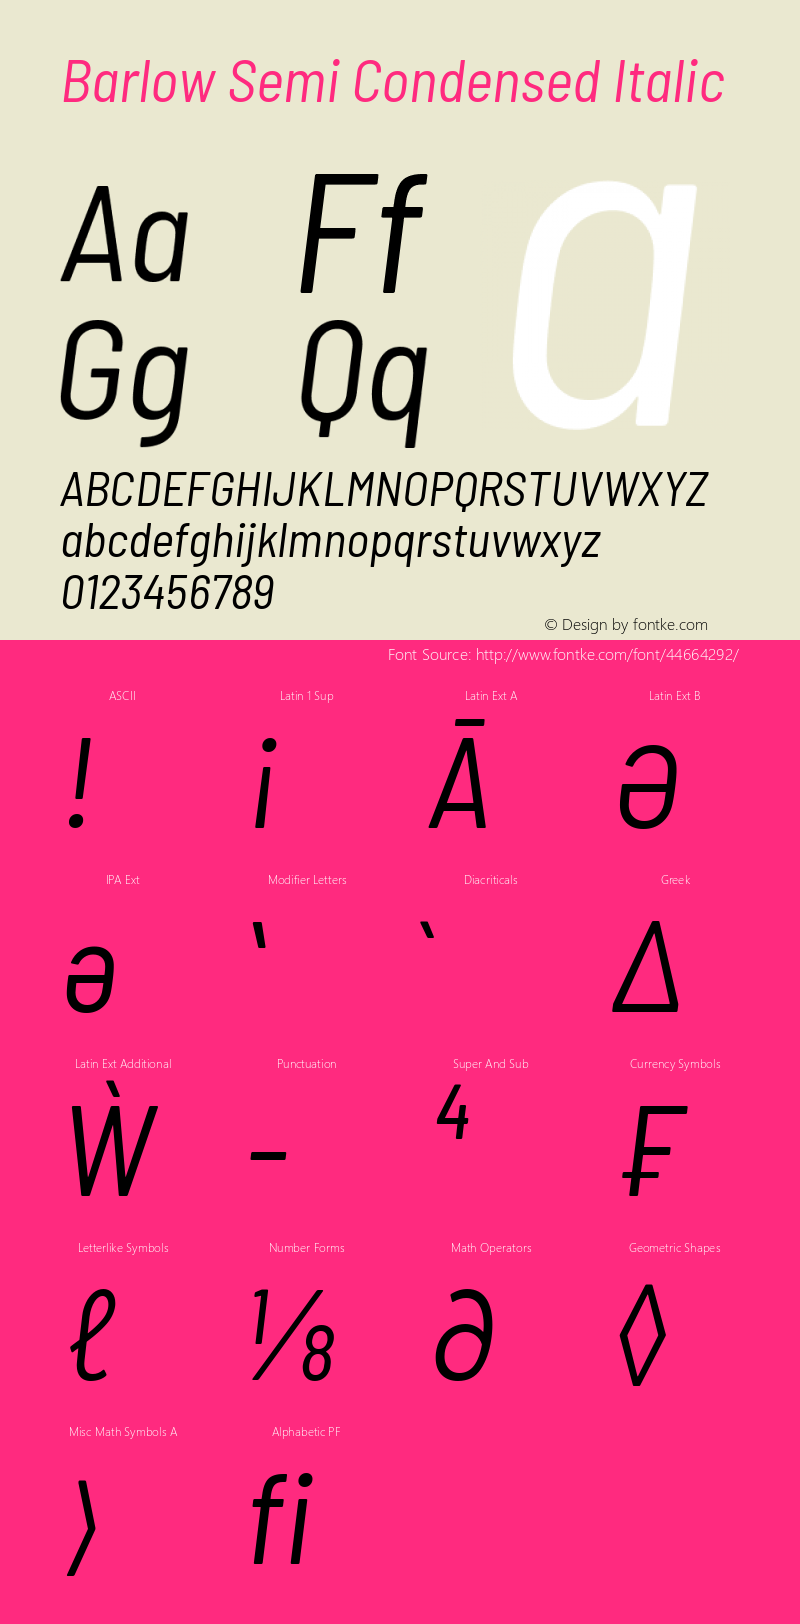 Barlow Semi Condensed Italic Version 1.408 Font Sample